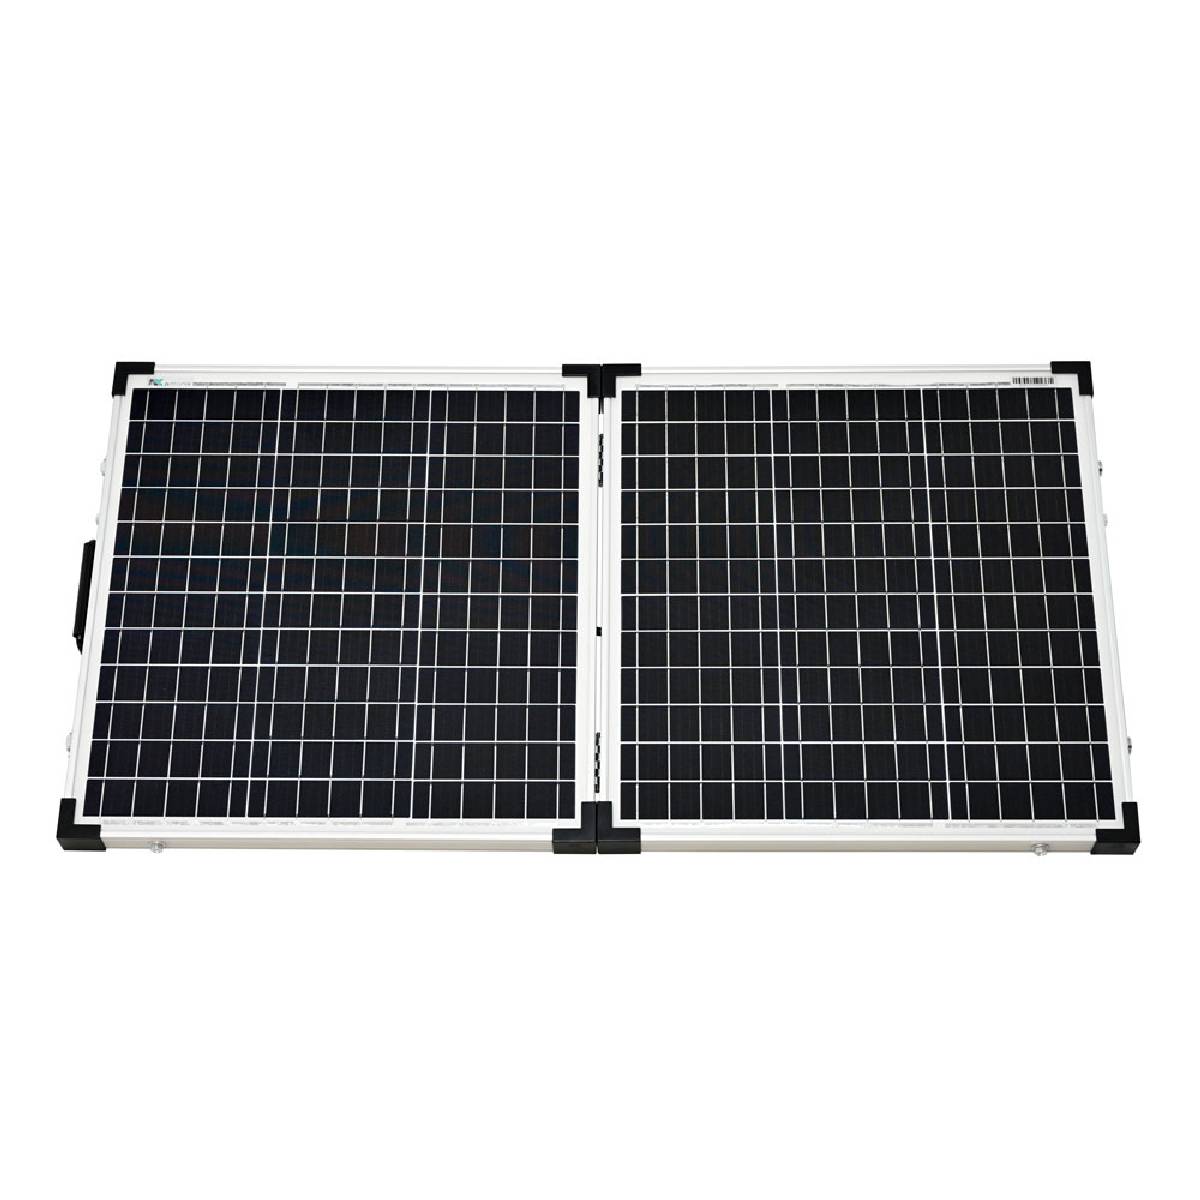 a-TroniX PPS Solar Case 2x50W 100W Solarkoffer mit MPPT